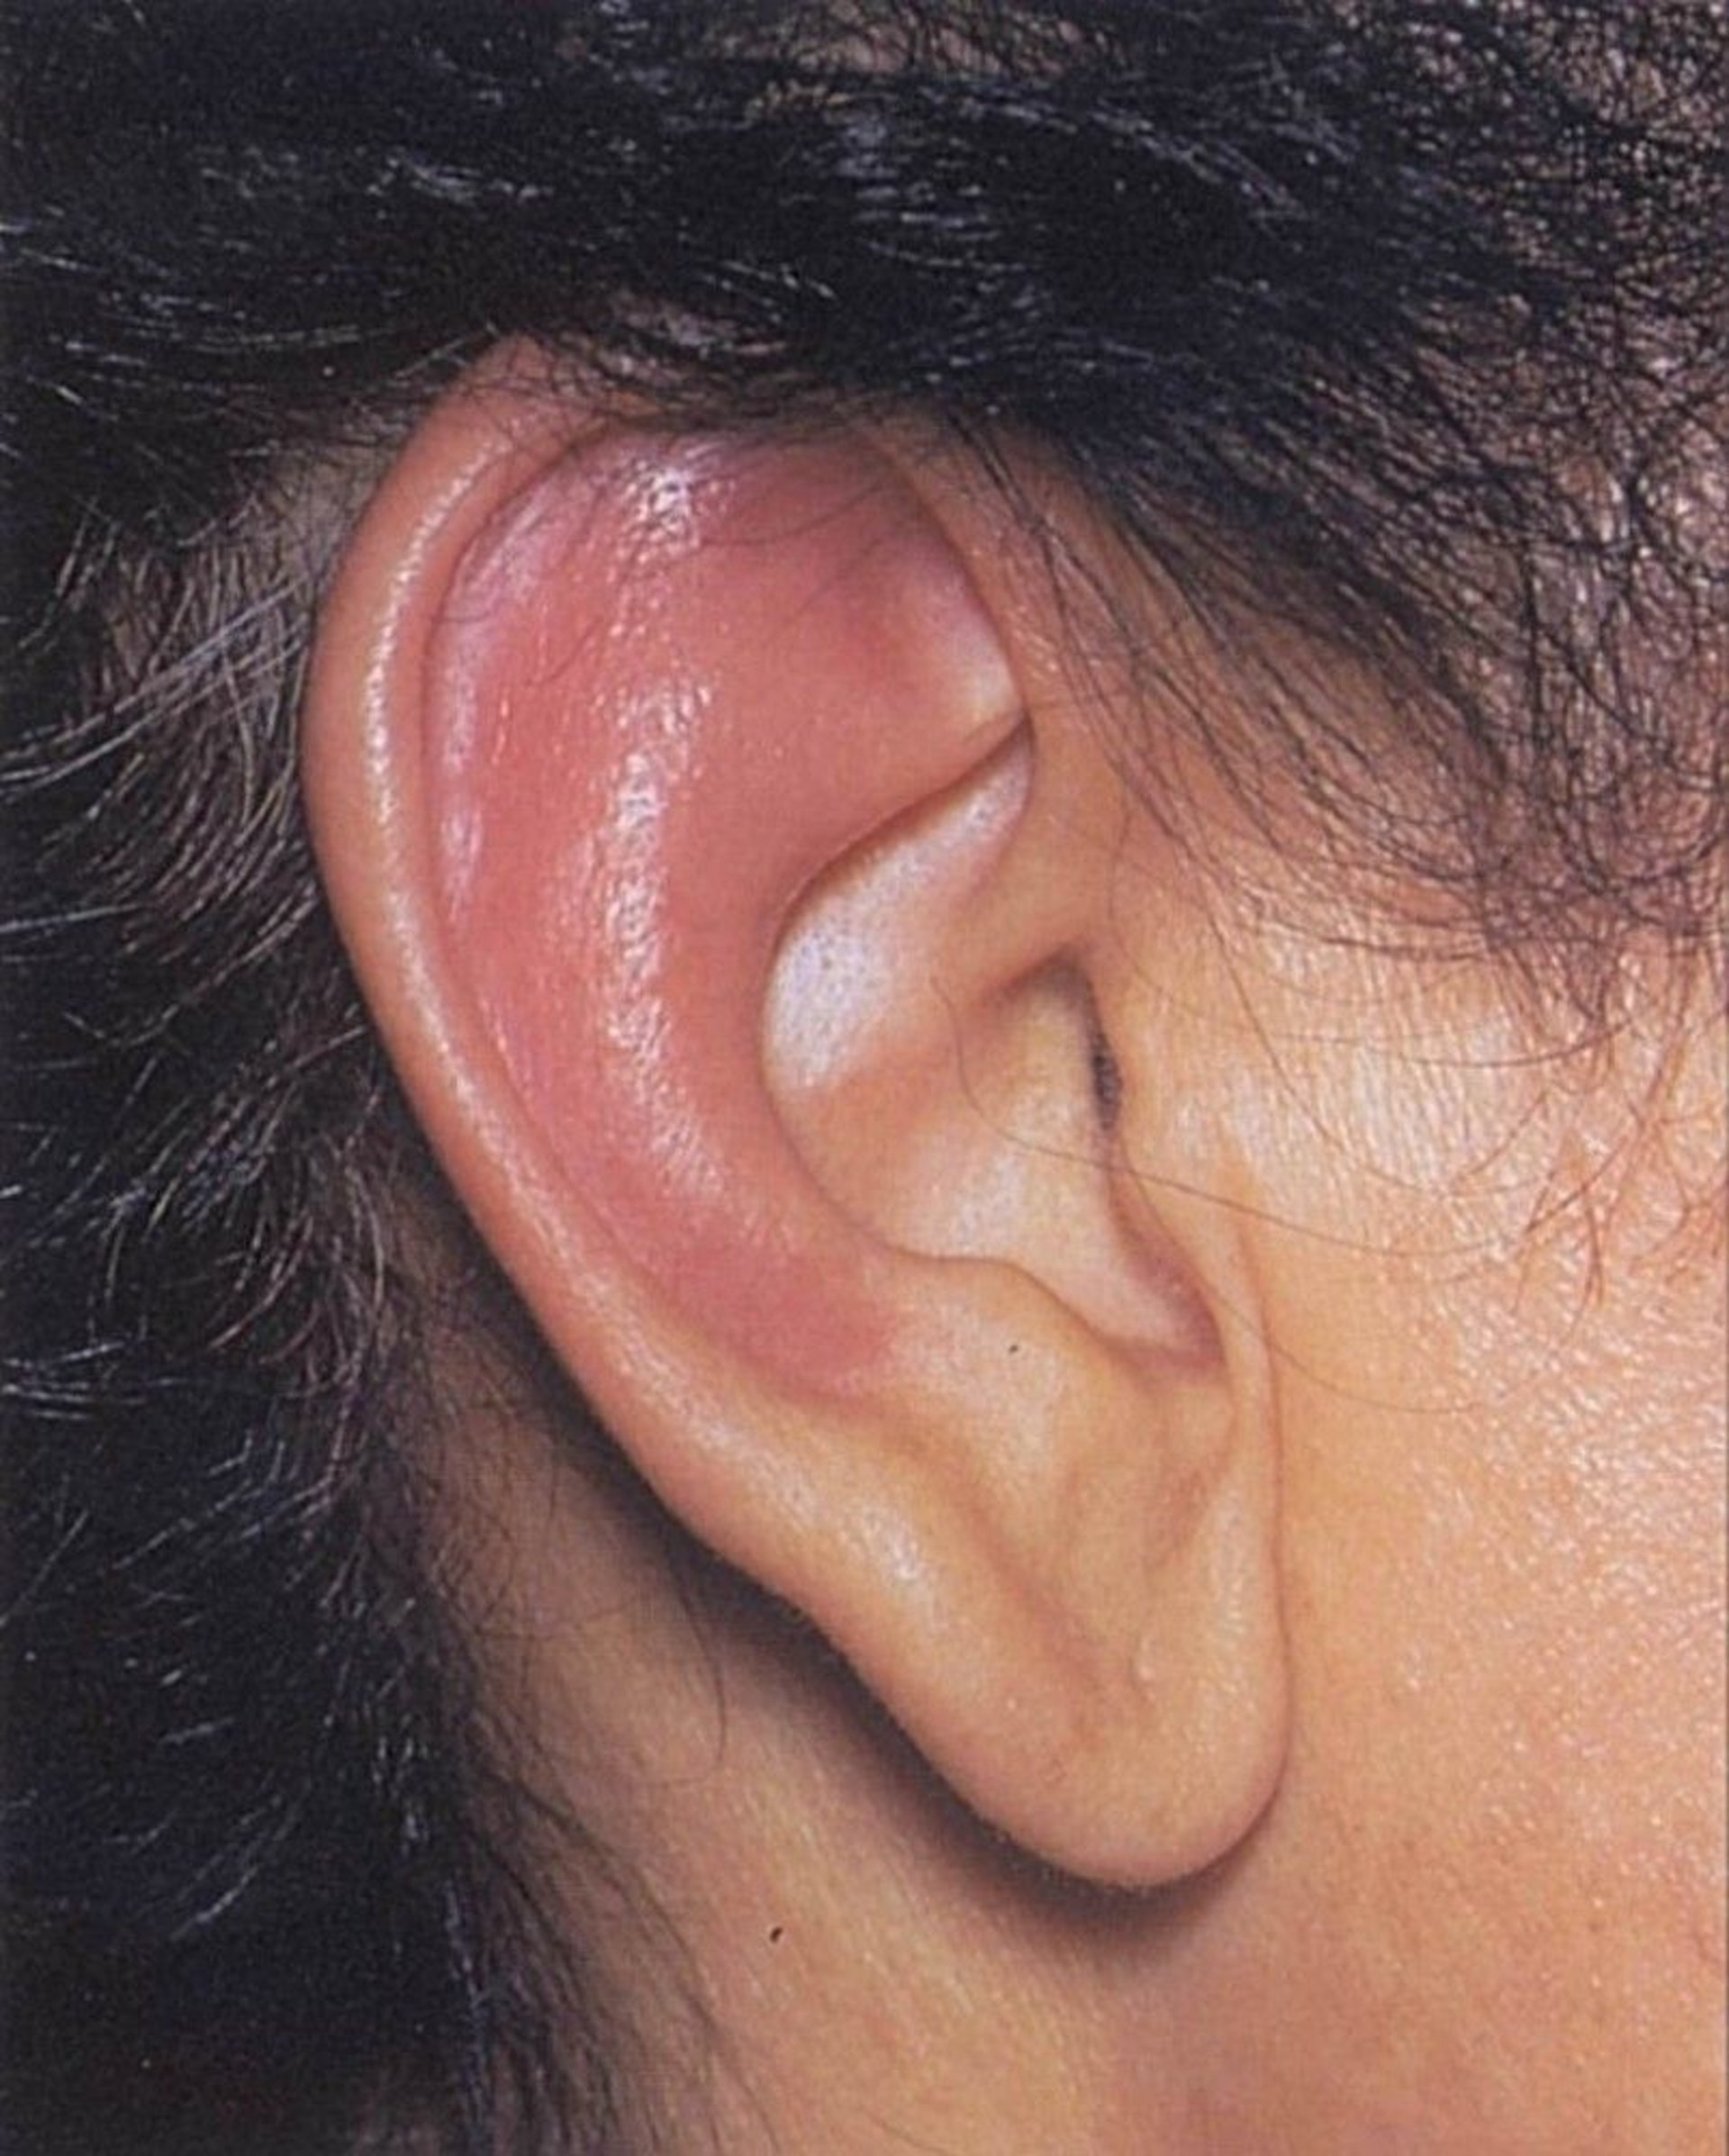 Relapsing Polychondritis (Ear)